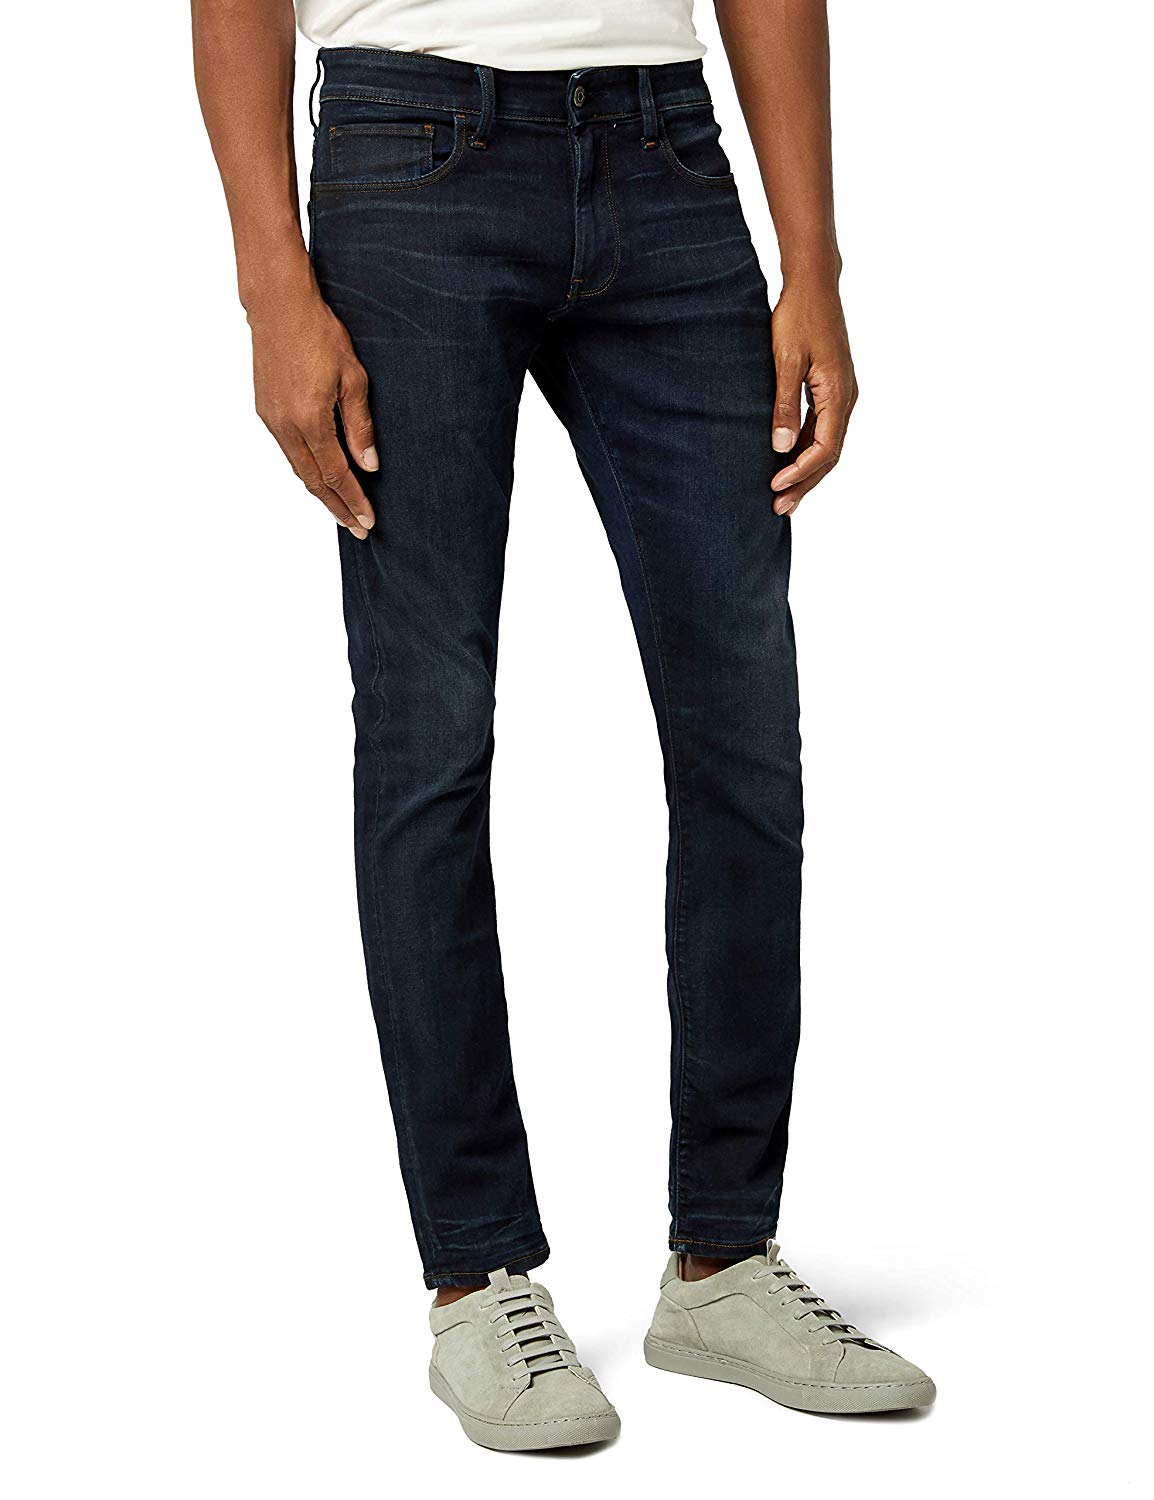 Jeans para Hombre G-STAR desde 29,7€